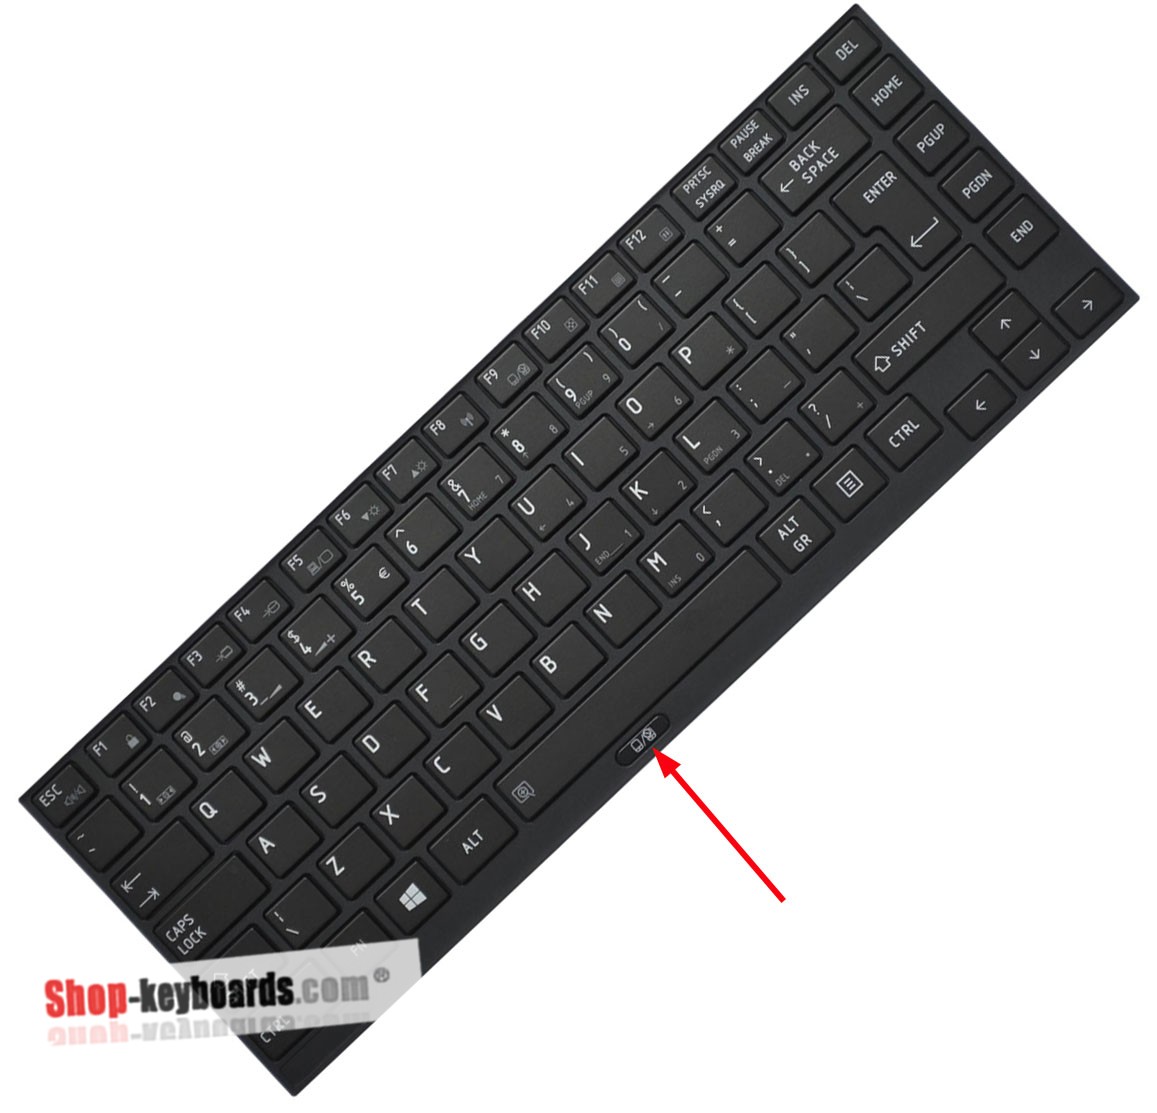 Toshiba Portege R731 Keyboard replacement